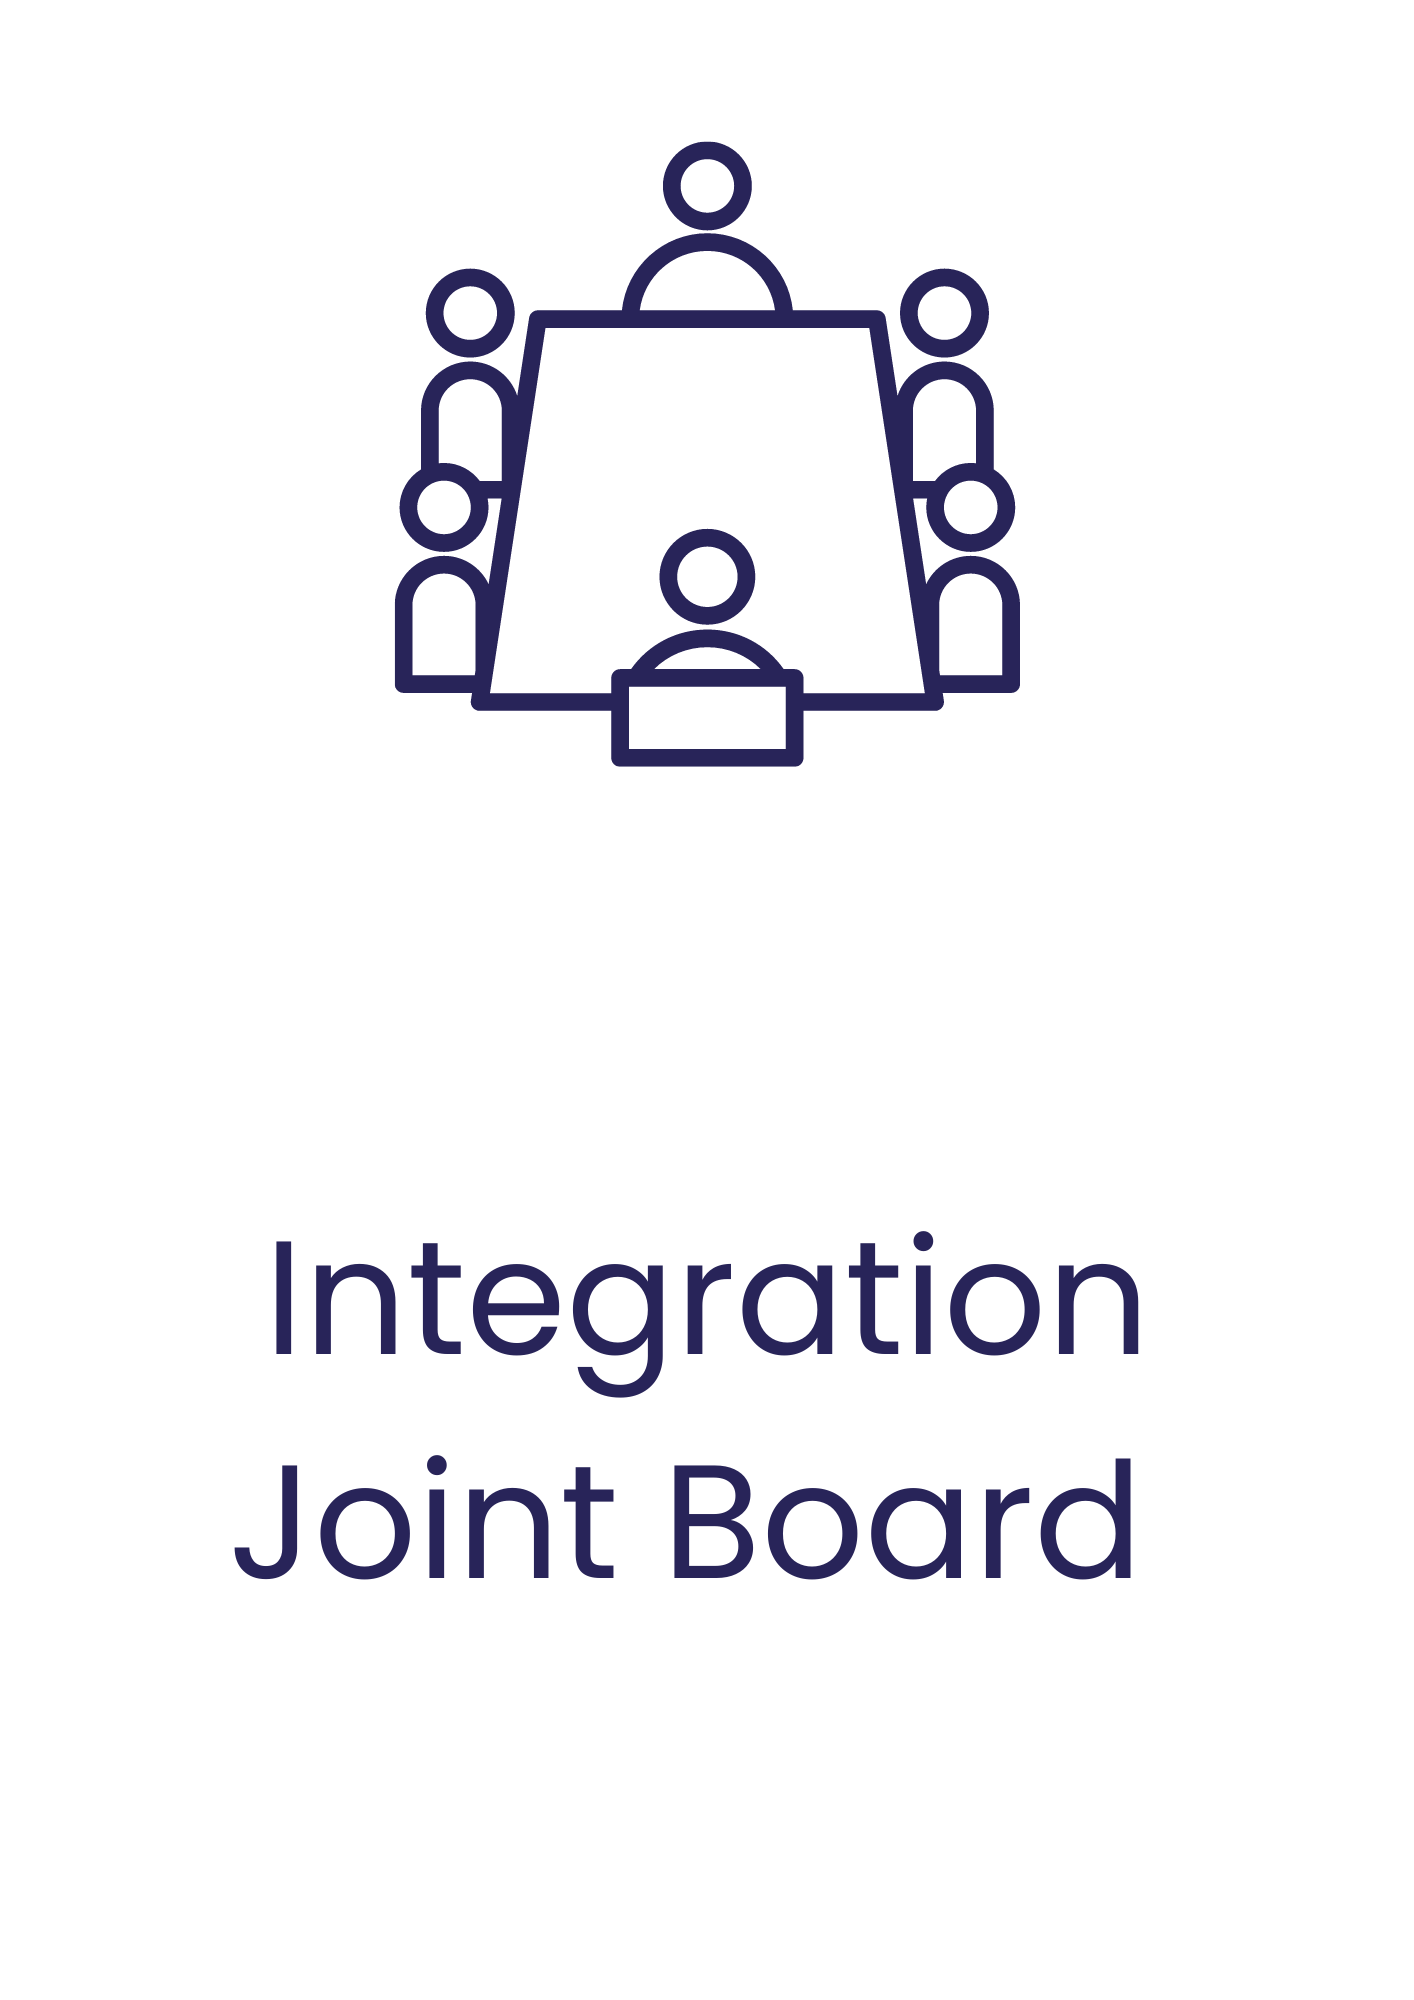 Joint board